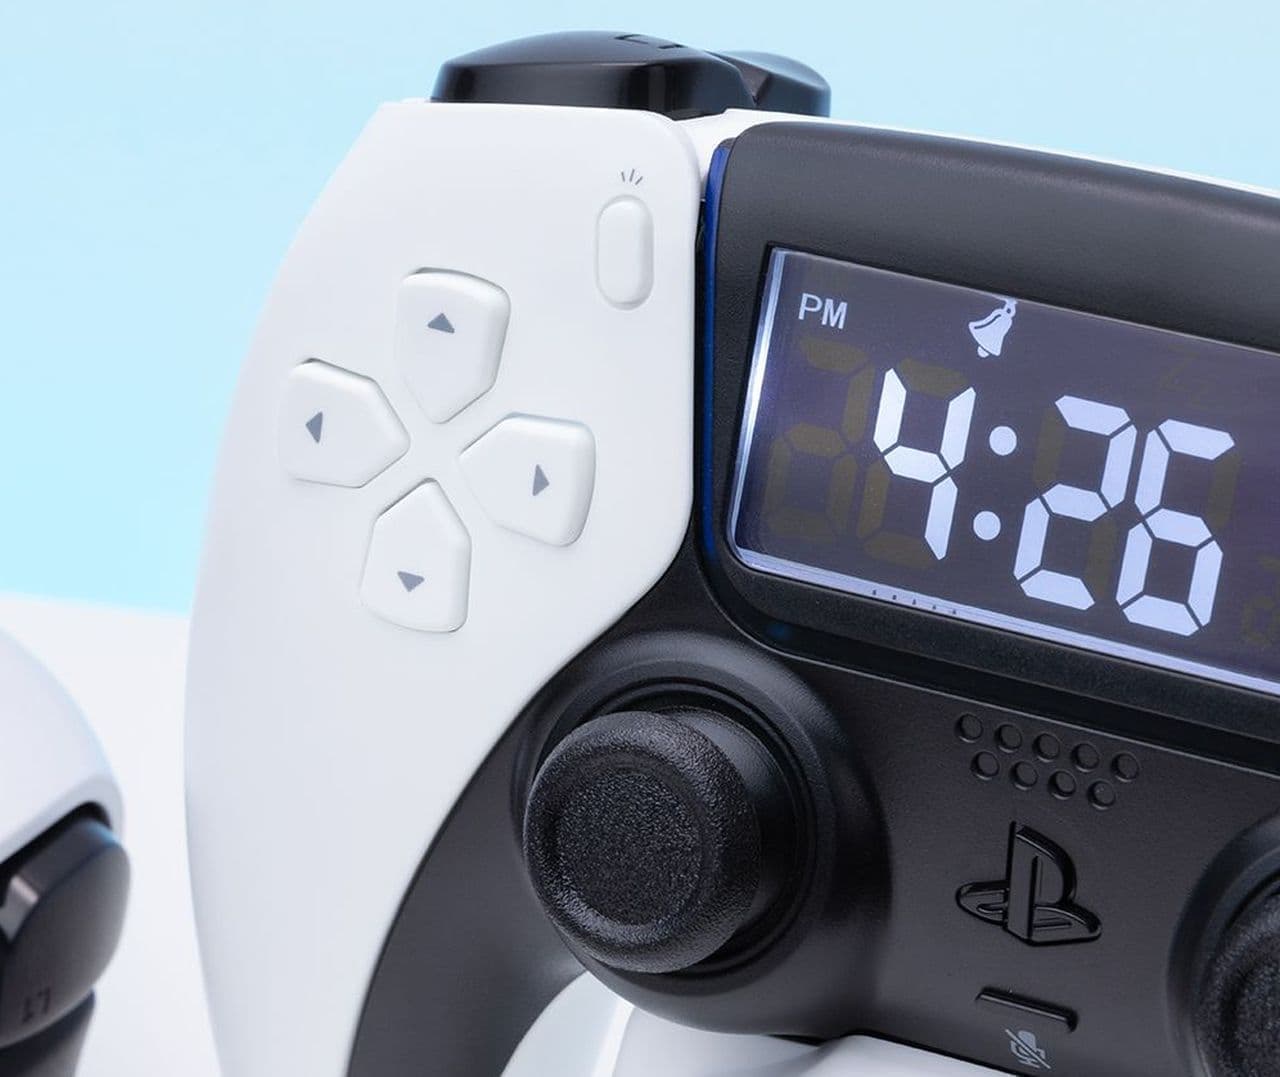 PlayStation 5 コントローラー型の目覚まし時計「PlayStation 5 Controller Alarm Clock」